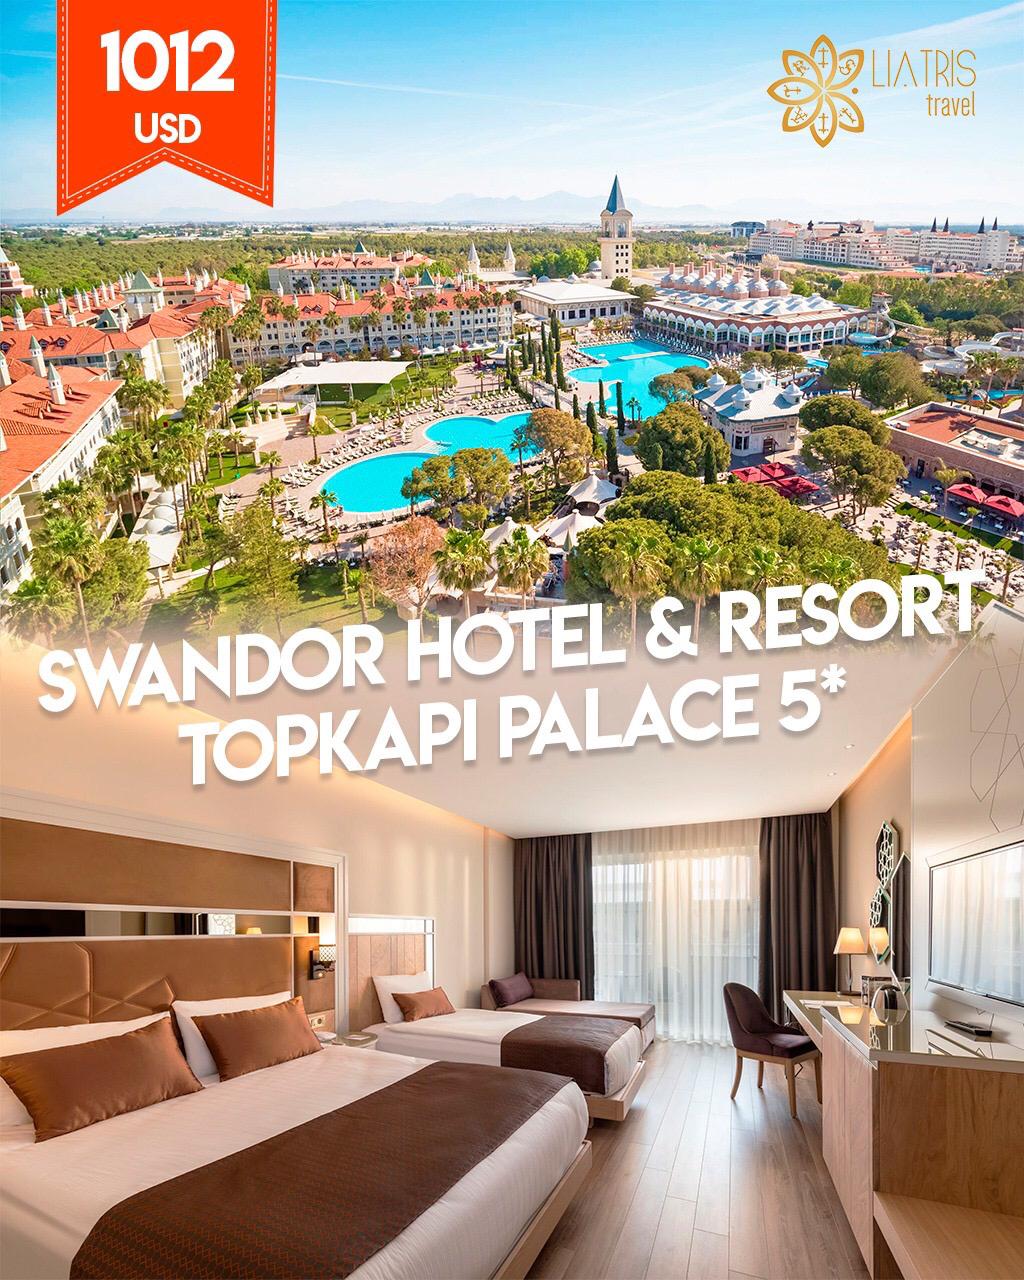 SWANDOR HOTEL & RESORT TOPKAPI PALACE 5*